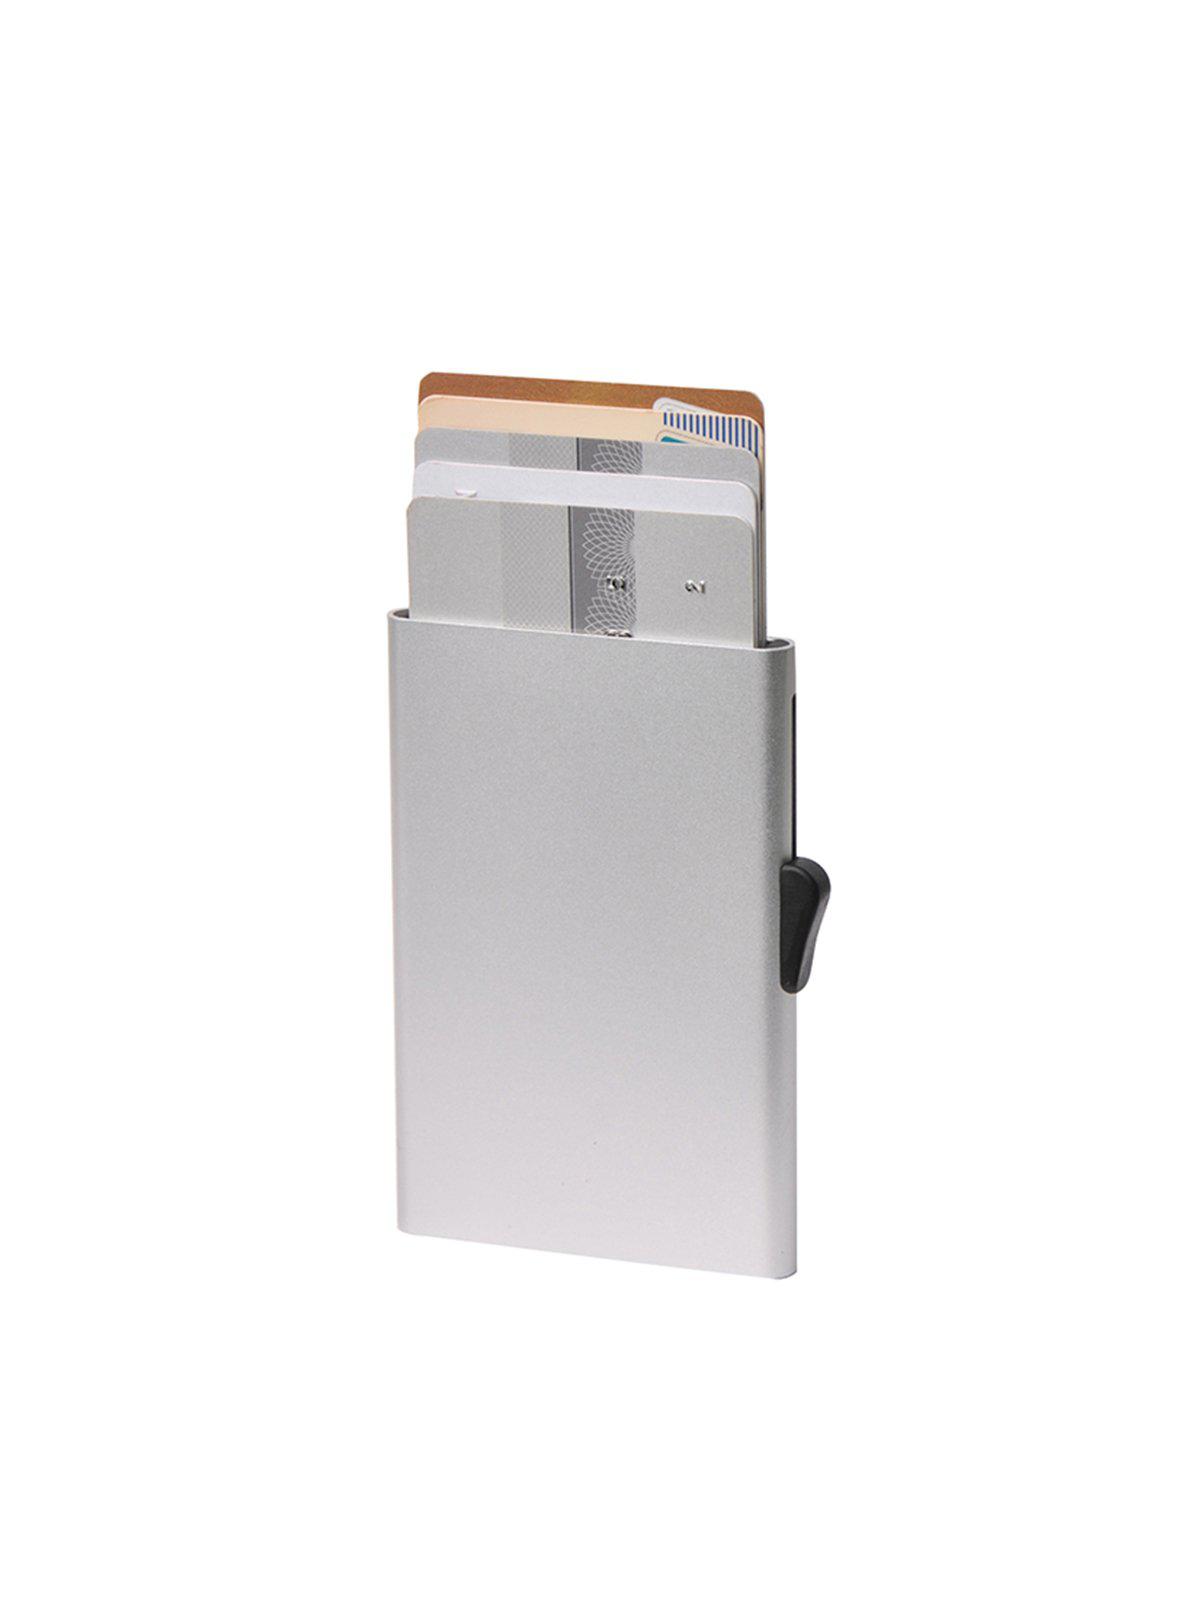 C-Secure Aluminium RFID Cardholder Silver - MORE by Morello Indonesia